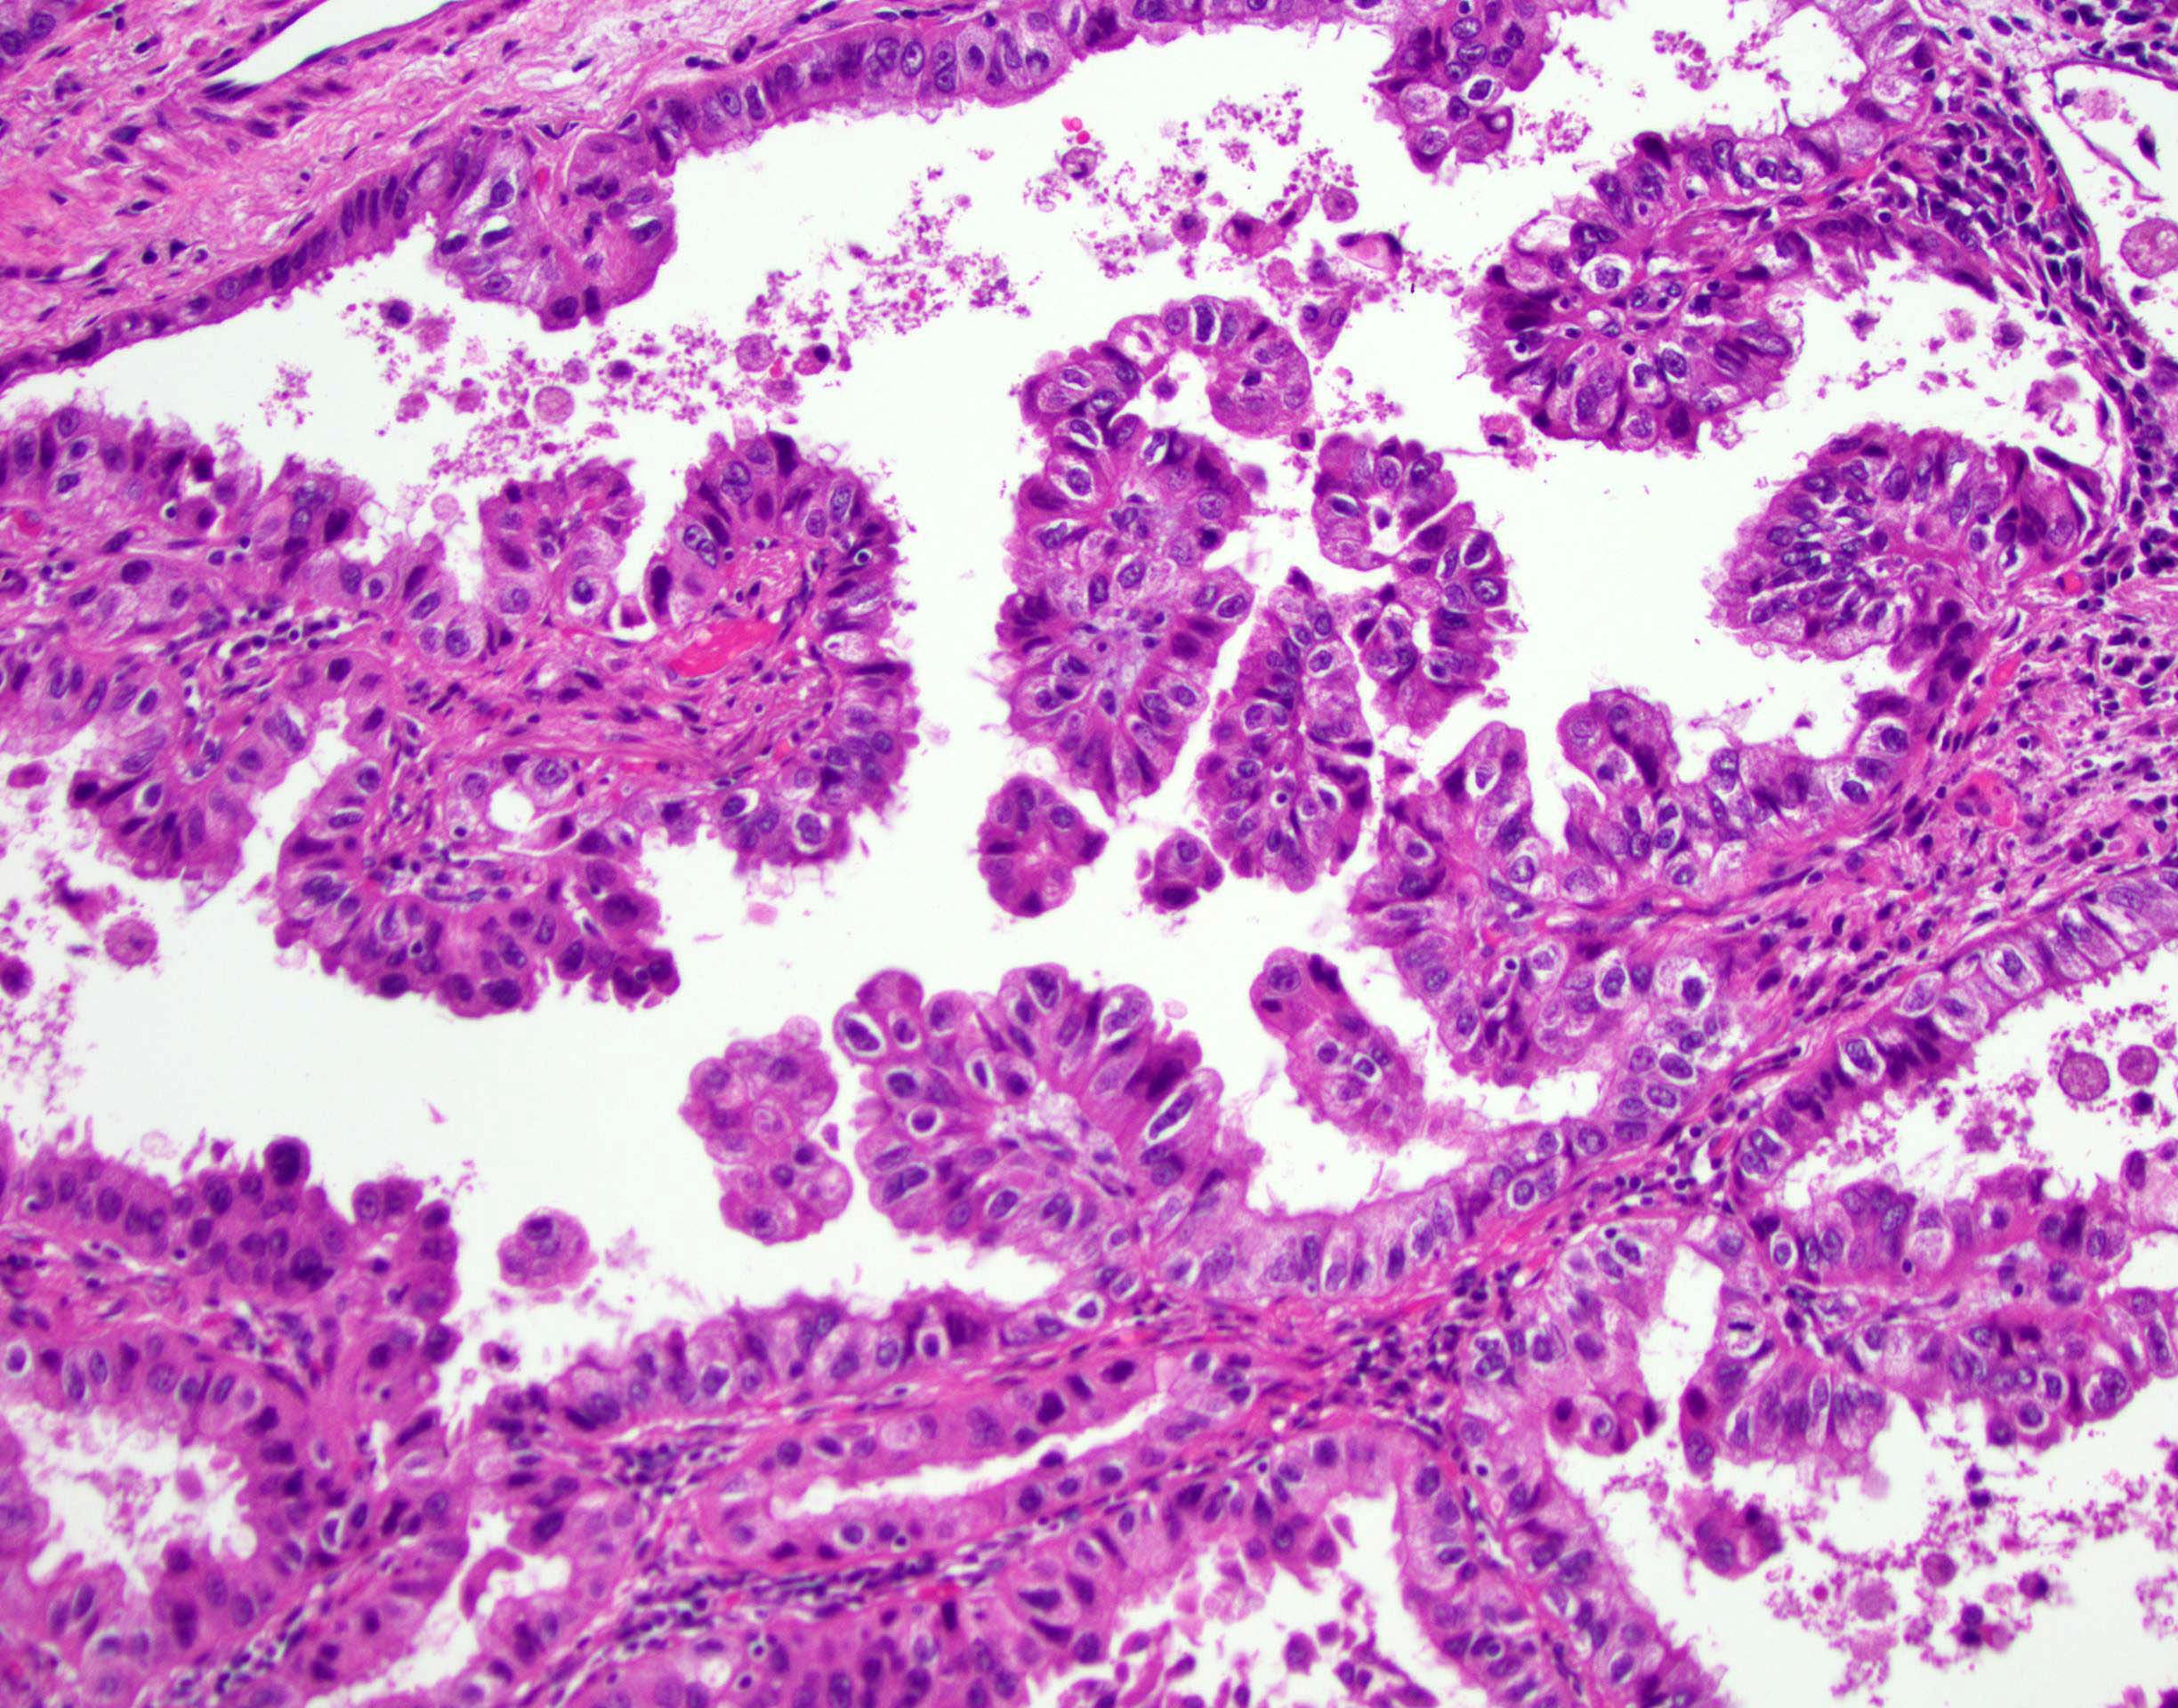 Papillary lesion lung - Papillary thyroid cancer lung nodule